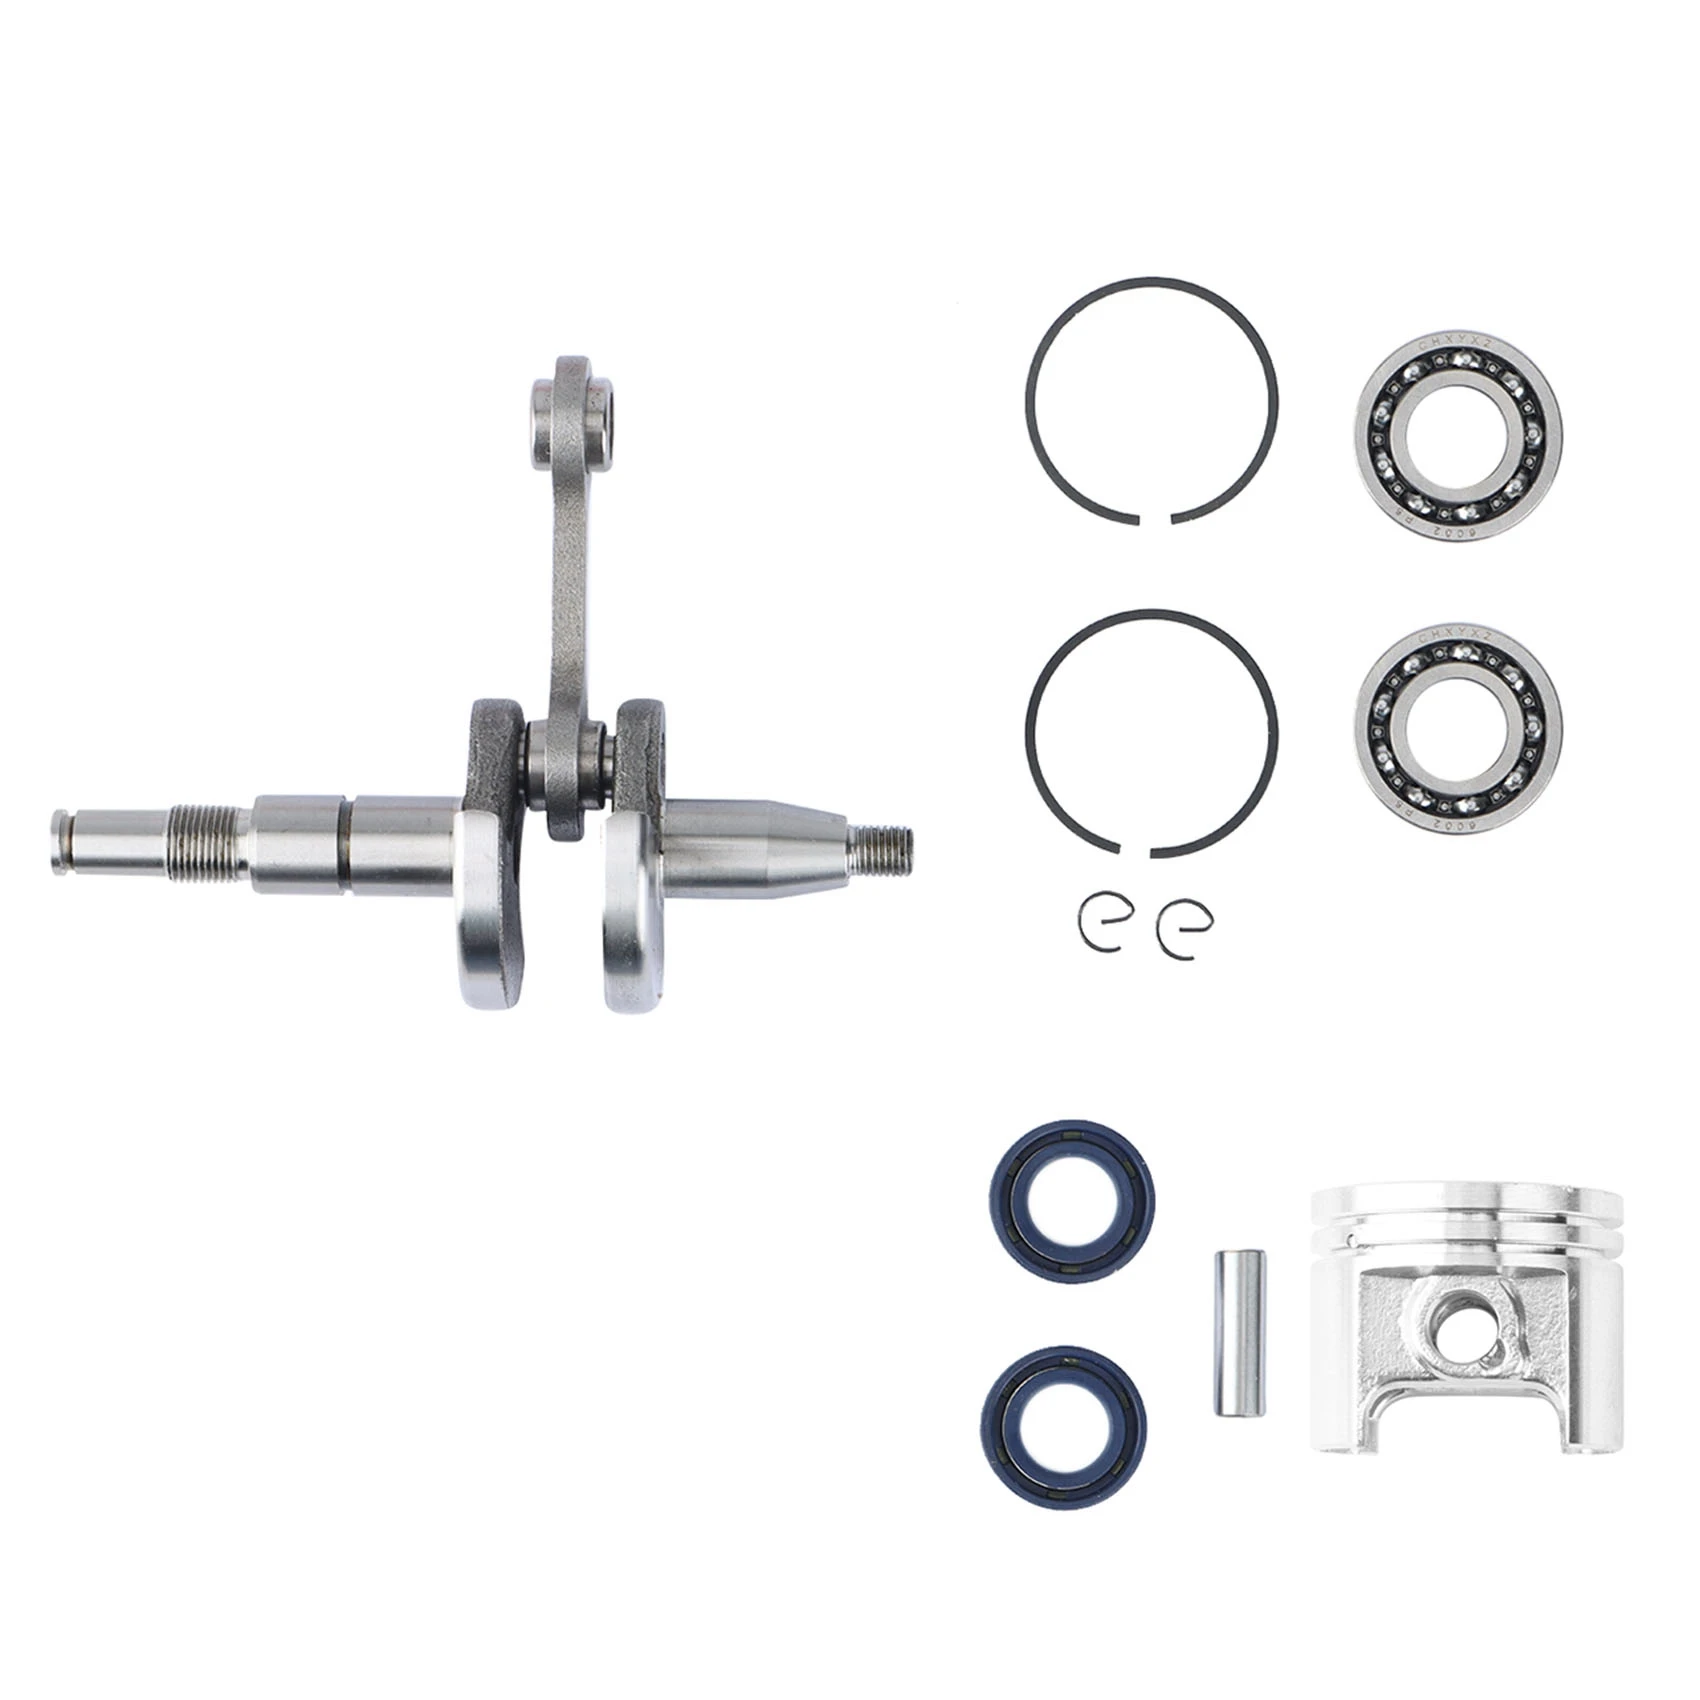 

Crankshaft Crank Bearing Oil Seal & 37mm Piston Ring Kit Fit for STIHL MS170 MS 170 017 Chainsaw Engine Motor Parts